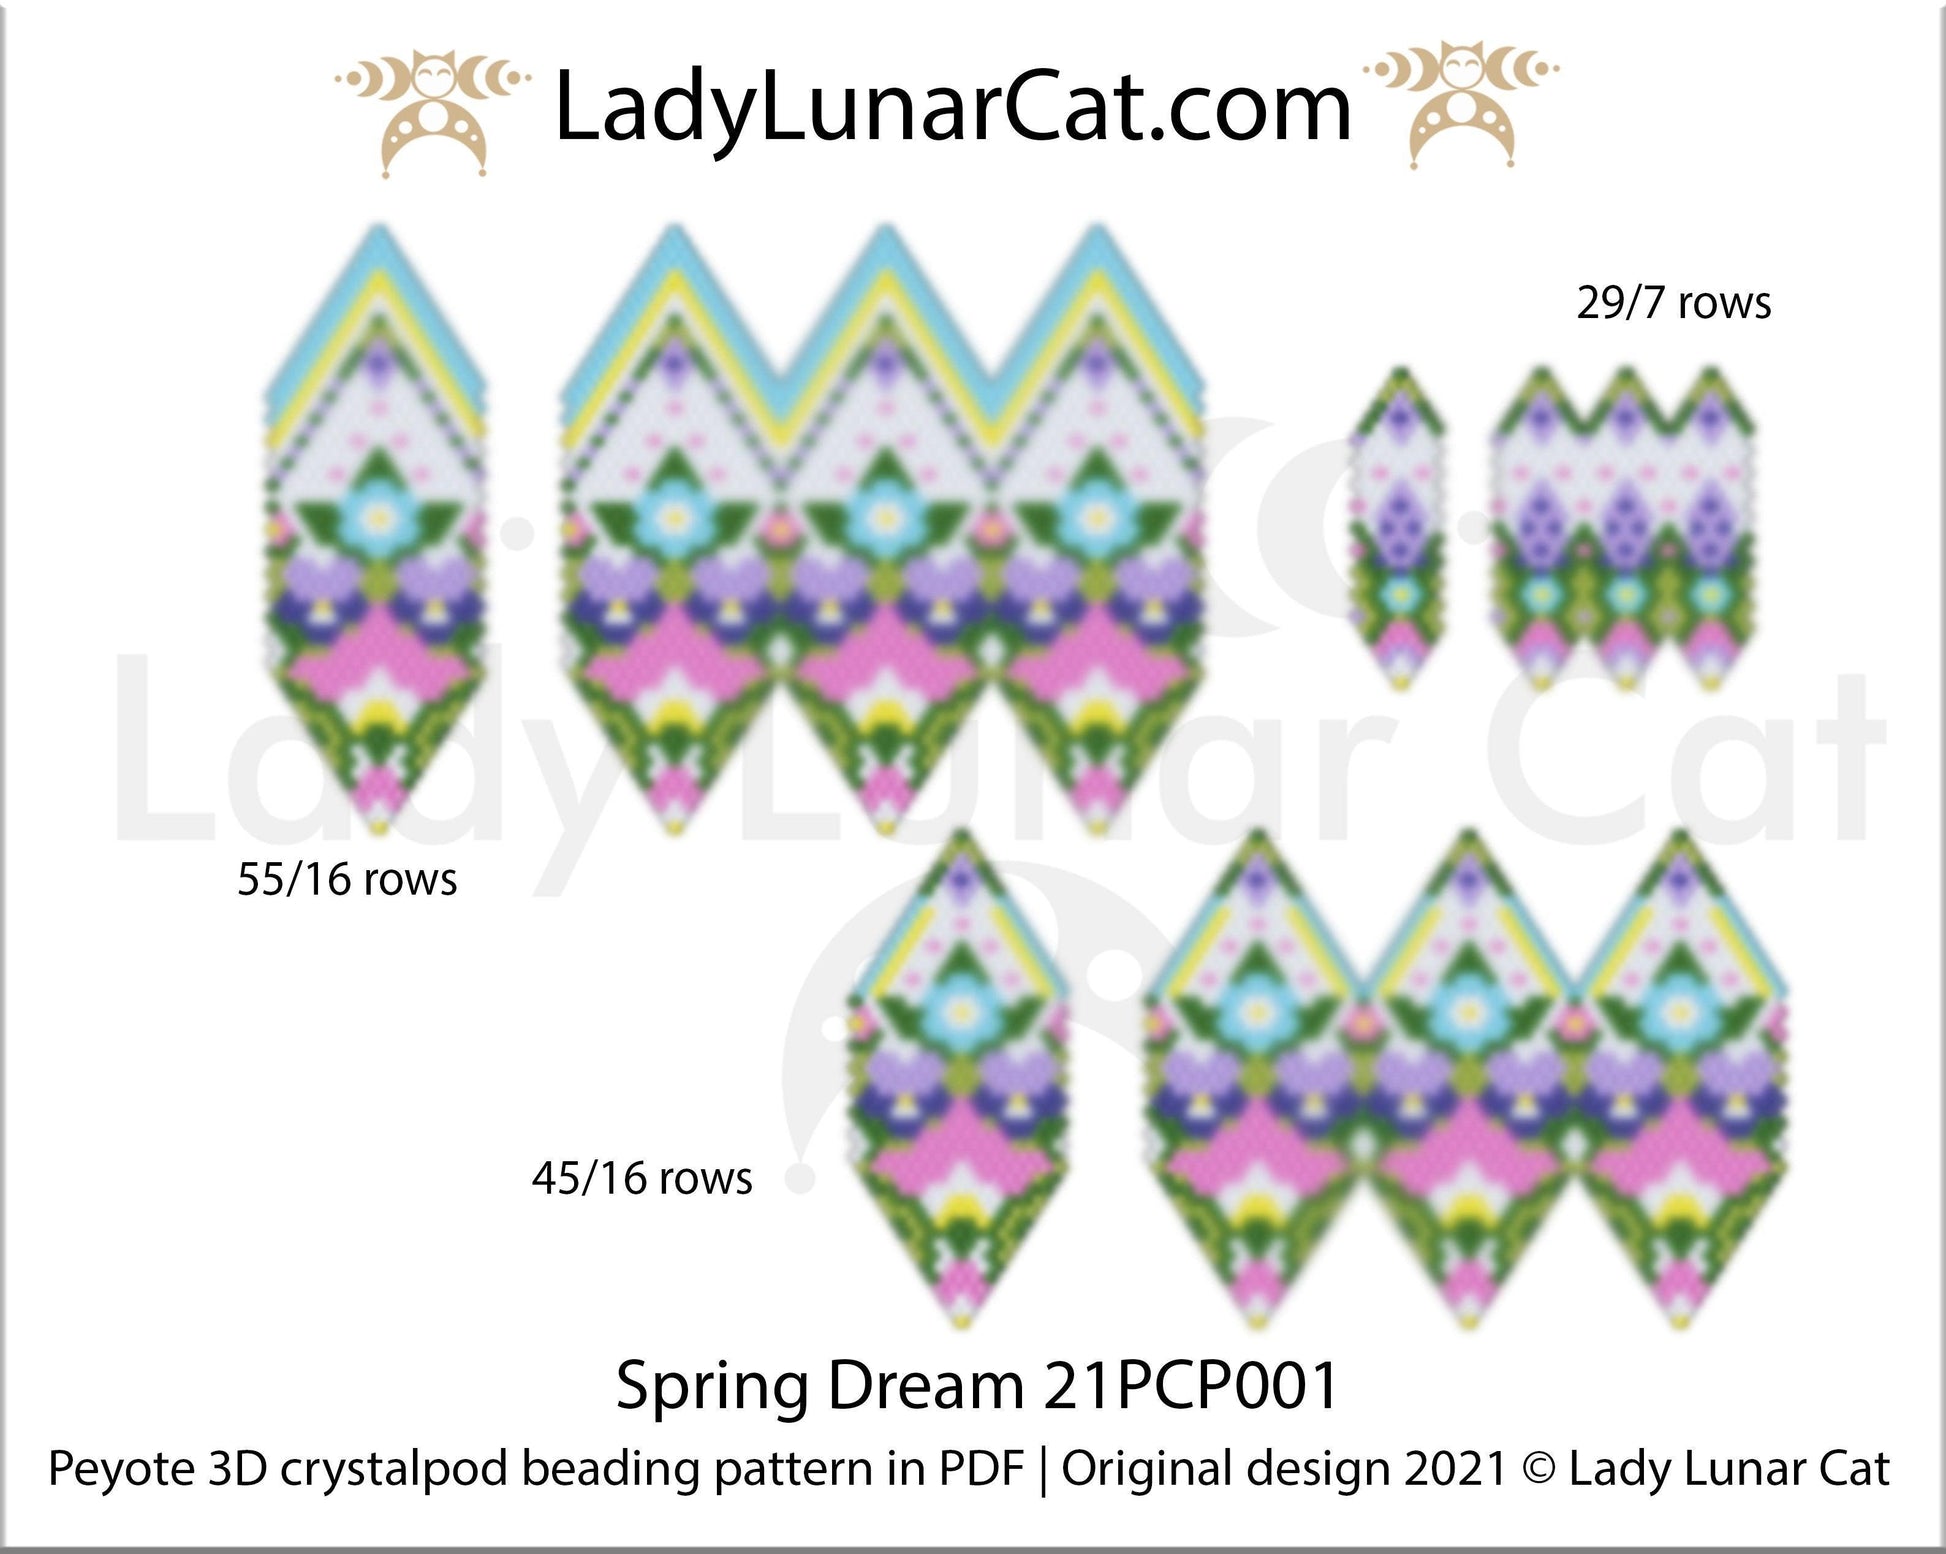 Copy of 3d peyote pod pattern or crystalpod pattern for beading  20PCP006 LadyLunarCat